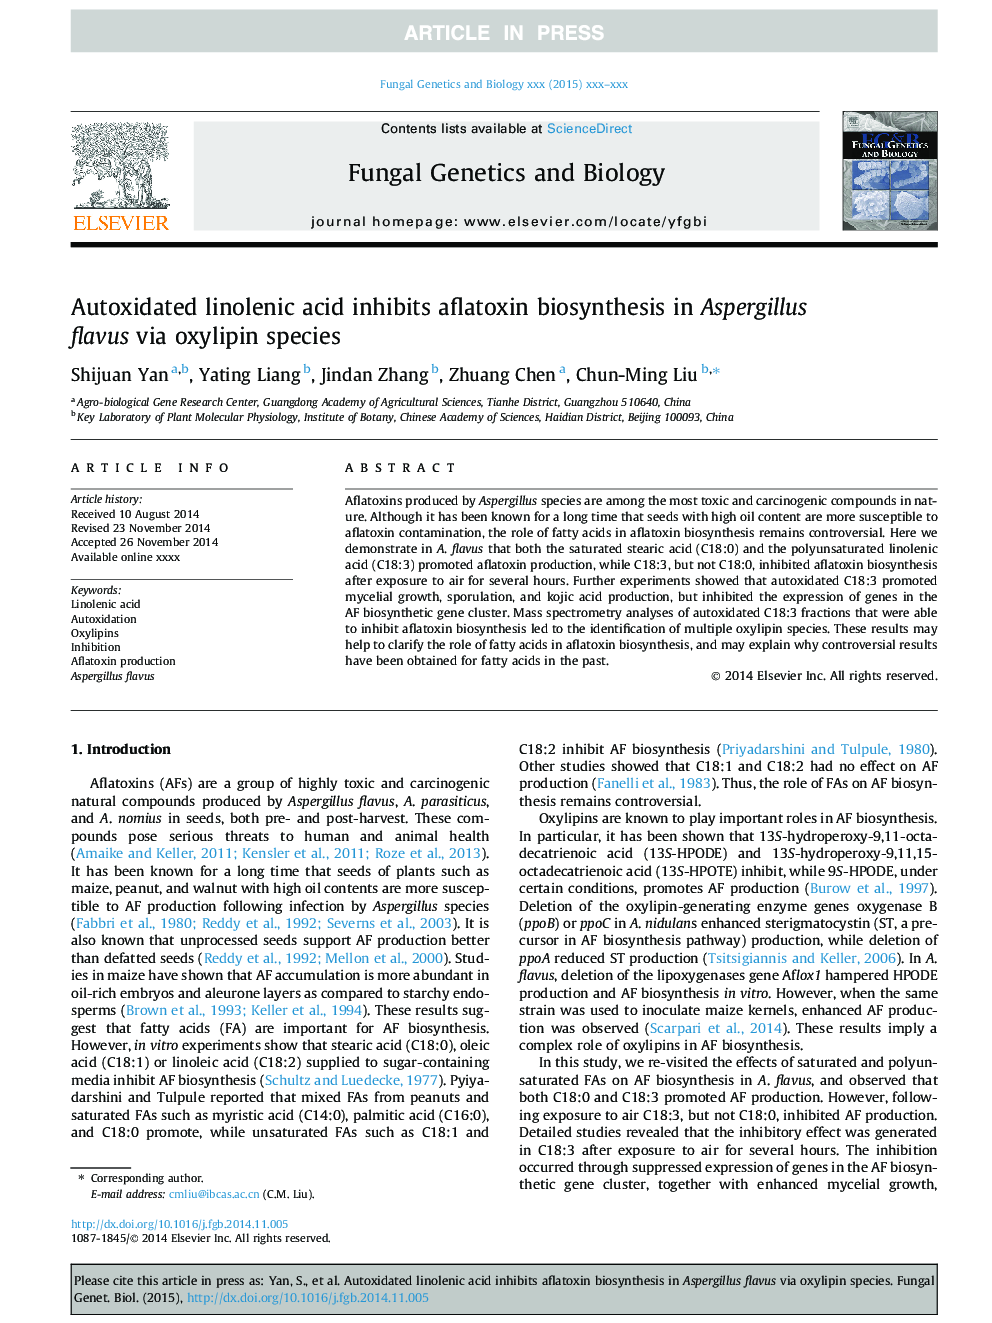 Autoxidated linolenic acid inhibits aflatoxin biosynthesis in Aspergillus flavus via oxylipin species